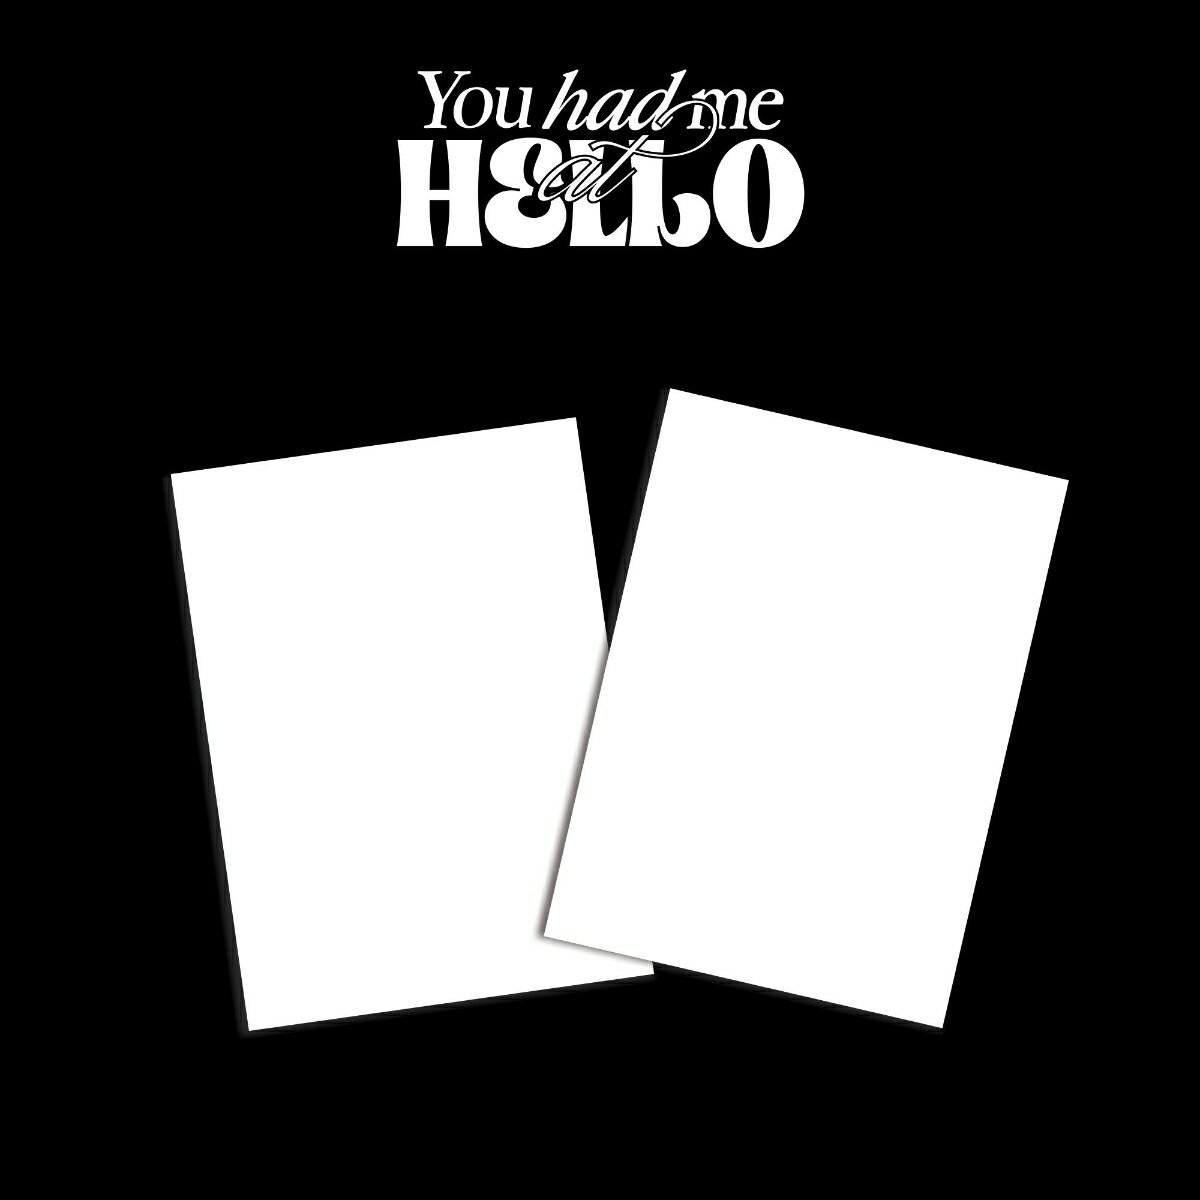 ZEROBASEONE The 3rd Mini Album [You had me at HELLO] 日本限定特典付きで販売決定！

5/13(月)に韓国で発売予定のZEROBASEONE The 3rd Mini Album [You had me at HELLO] (ECLIPSE ver. / SUNSHOWER ver.)が日本限定特典付きでの販売が決定いたしました！